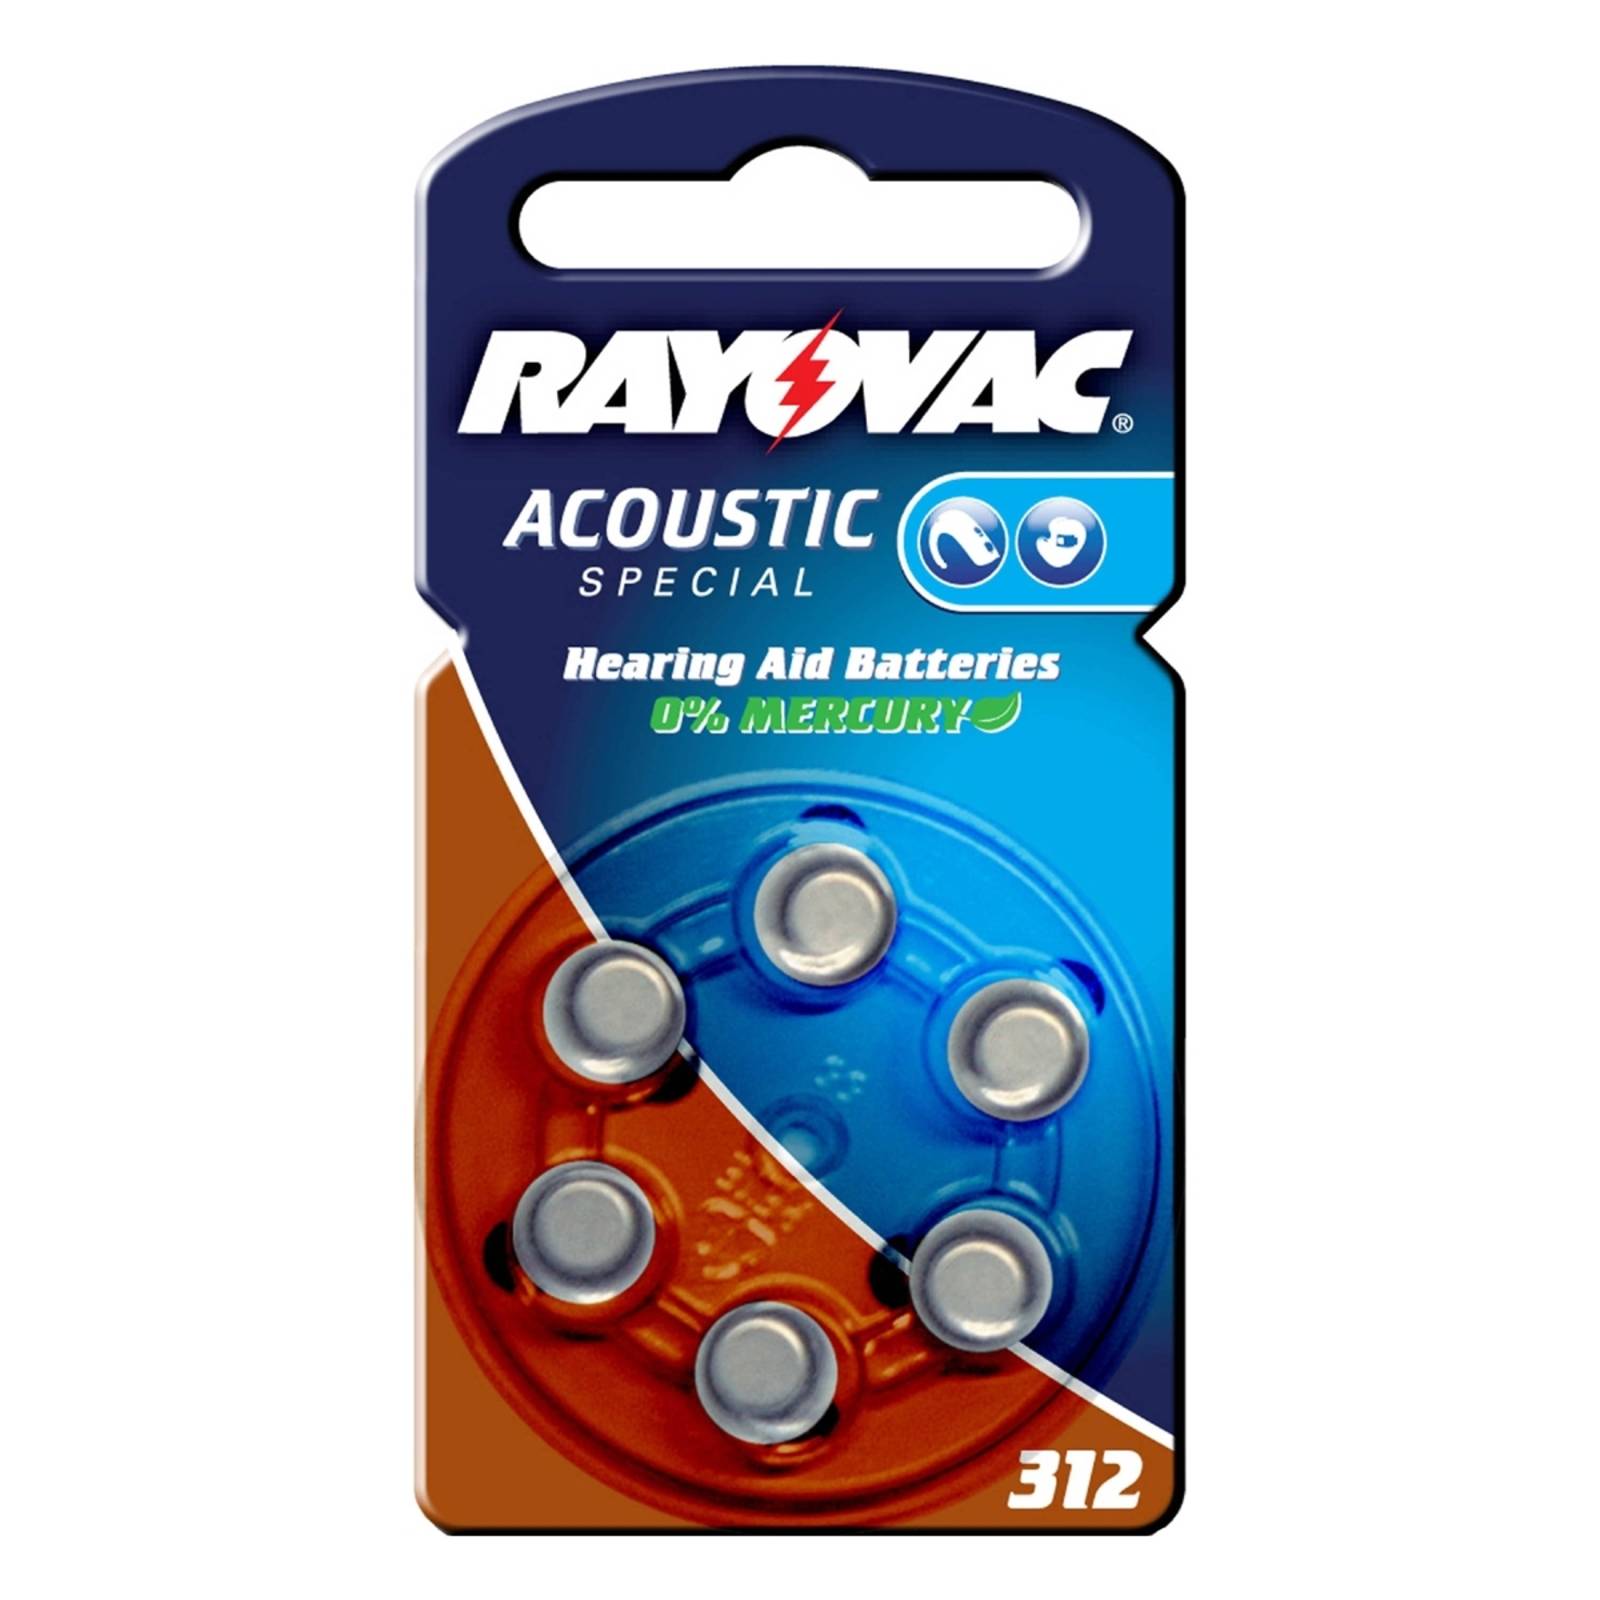 Knapbatteri Rayovac 312 Acoustic 1,4V 180m/Ah